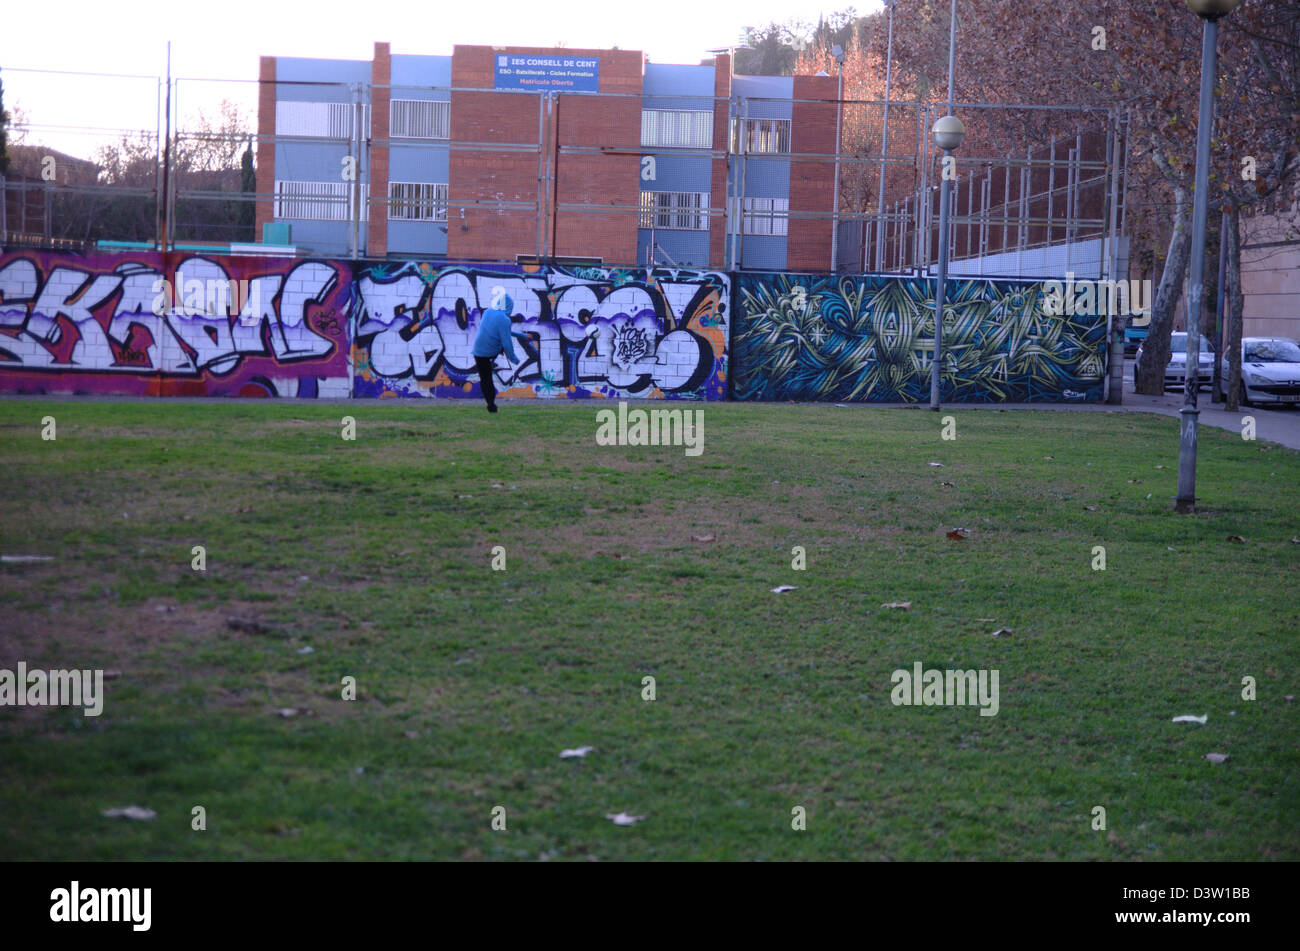 Graffiti in Paral·lel Avenue in Barcelona. Boy playing soccer in suburbian surroundings Stock Photo